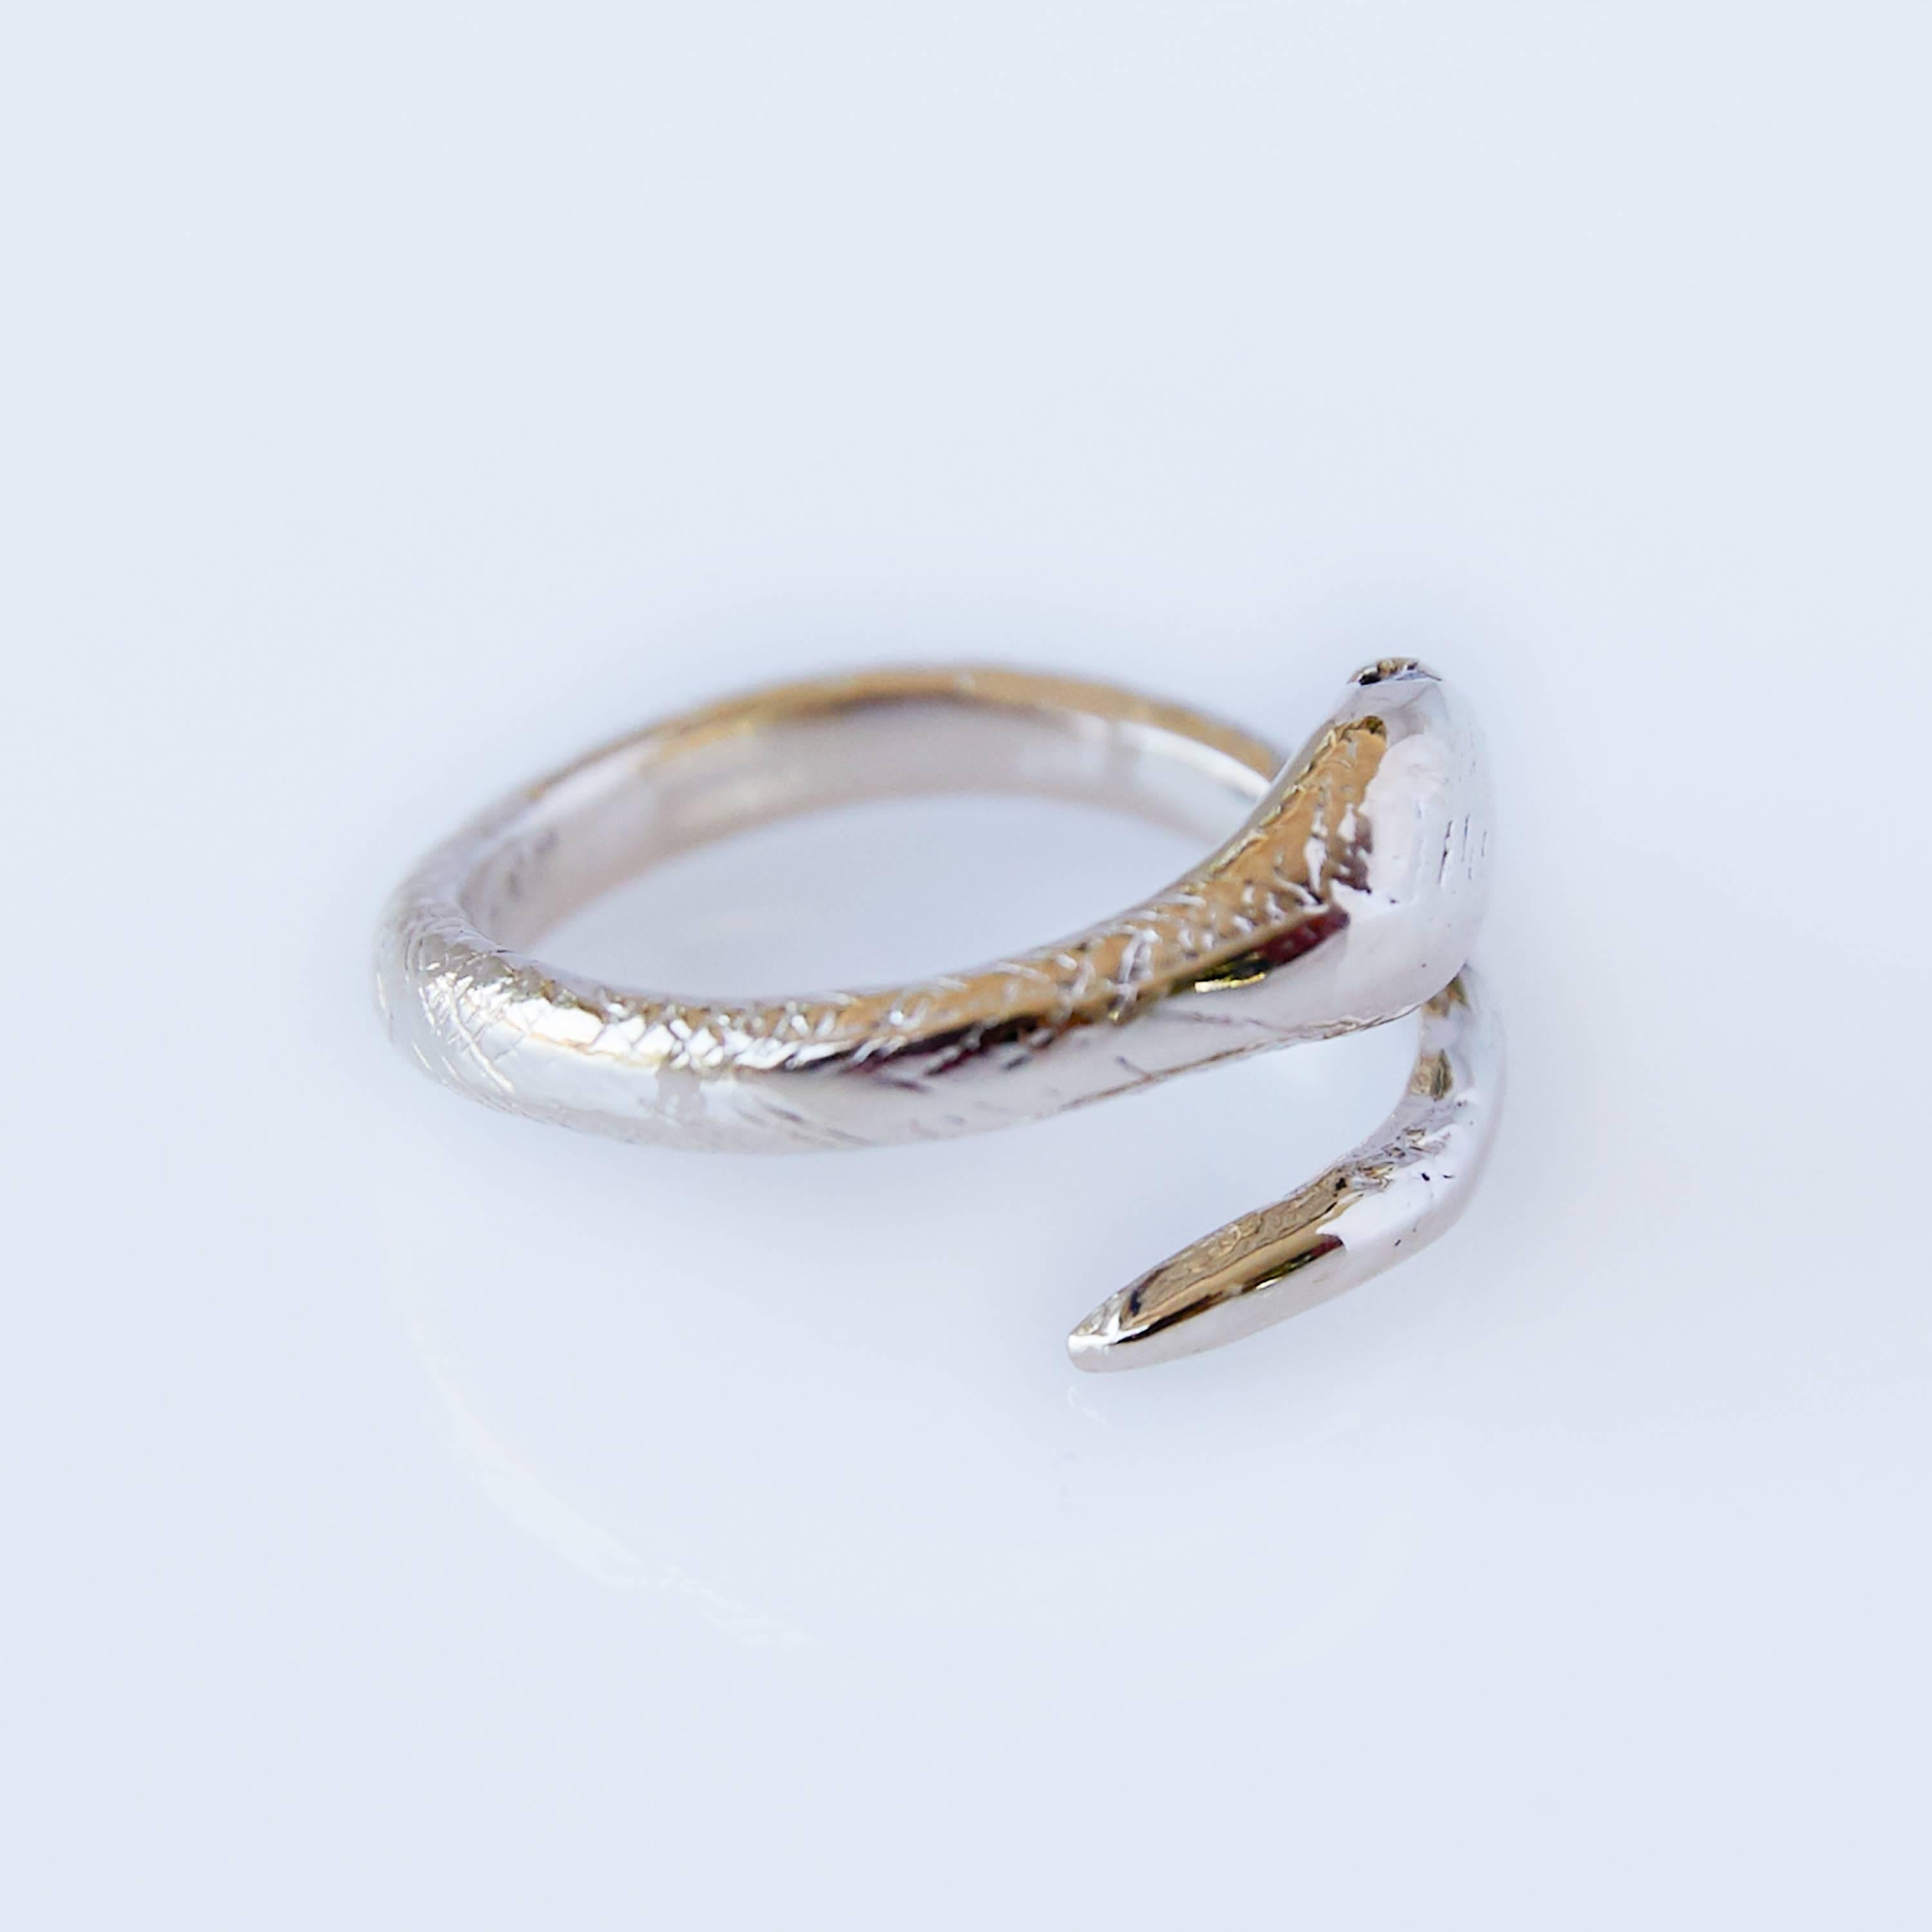 Sapphire Snake Ring Bronze Fashion Cocktail Ring Adjustable J Dauphin

J DAUPHIN 